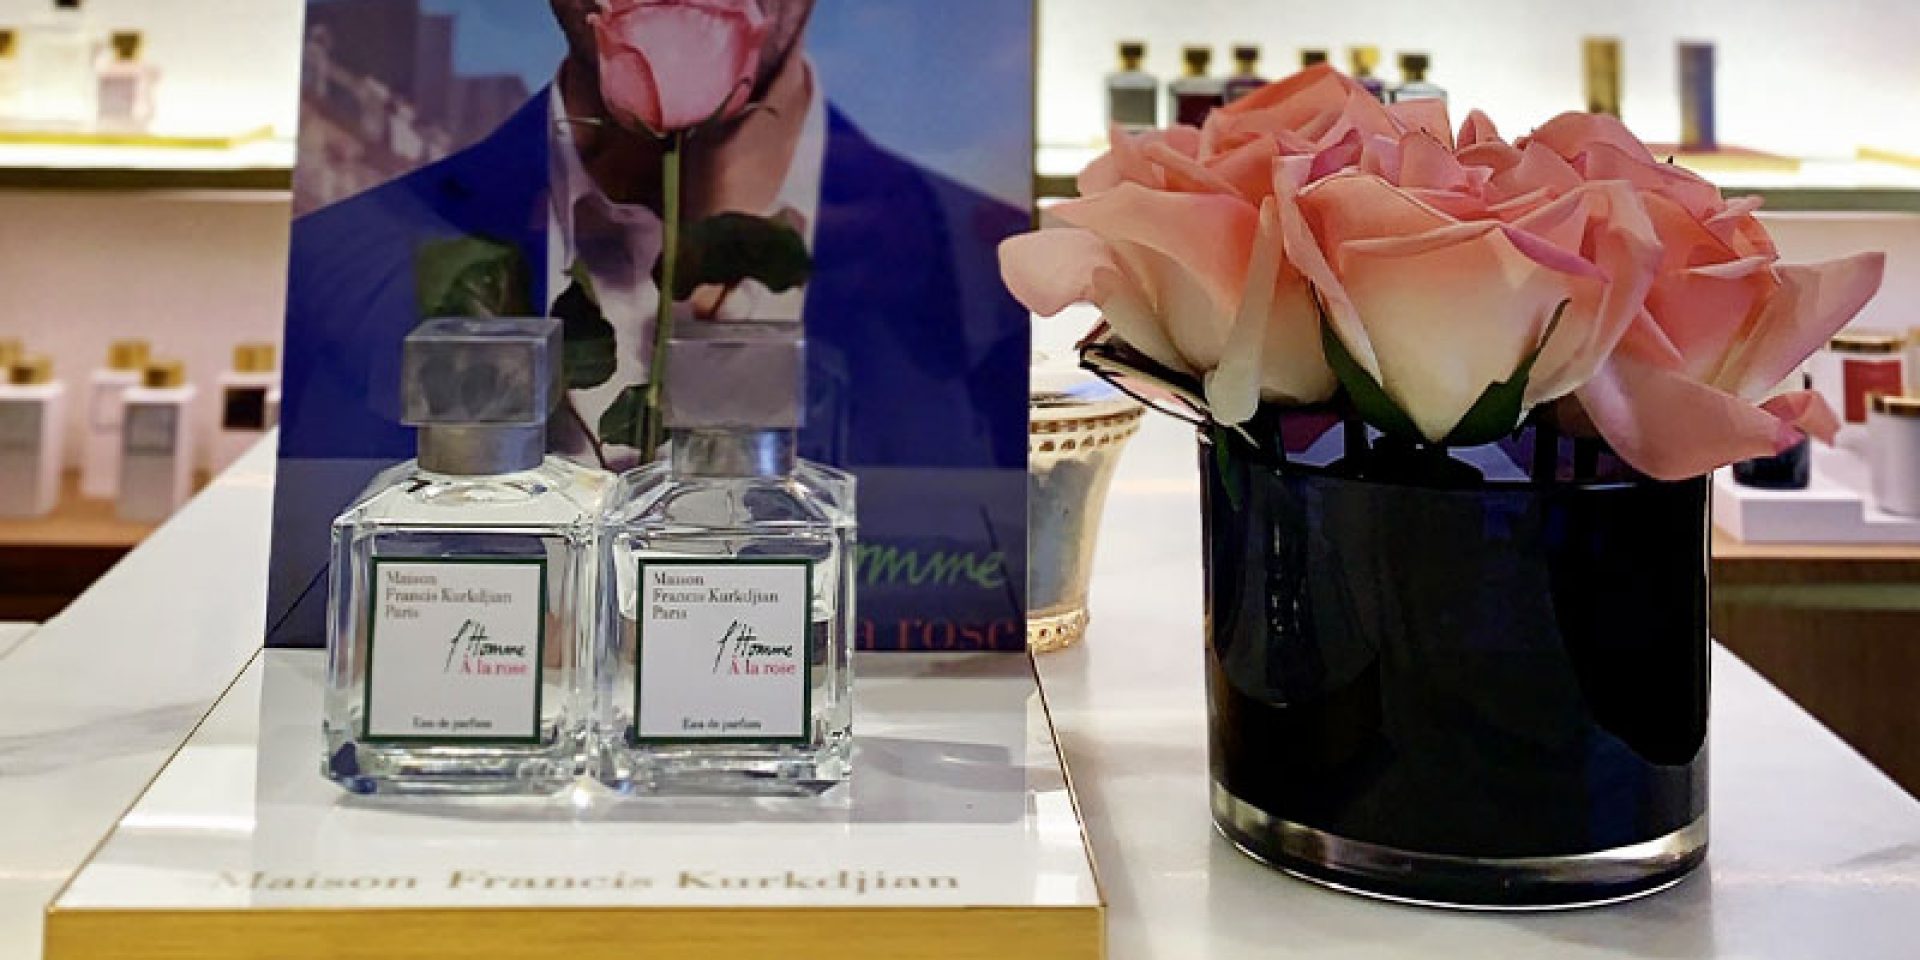 Secret Notes launches Maison Francis Kurkdjian new fragrance - Abu